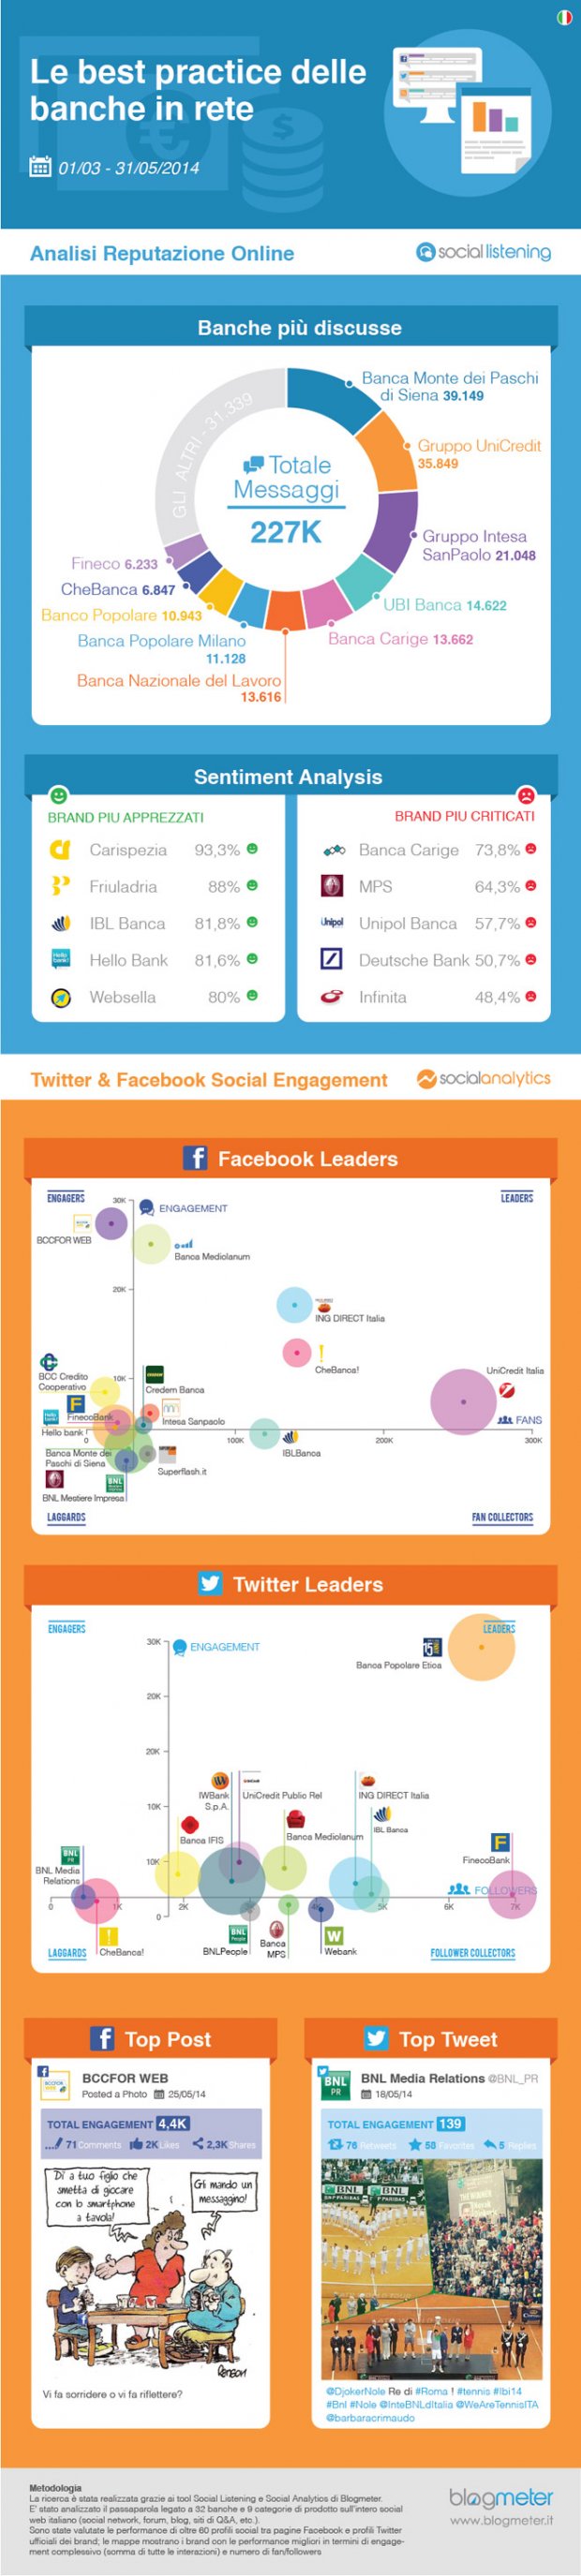 banche-social-media-infografica